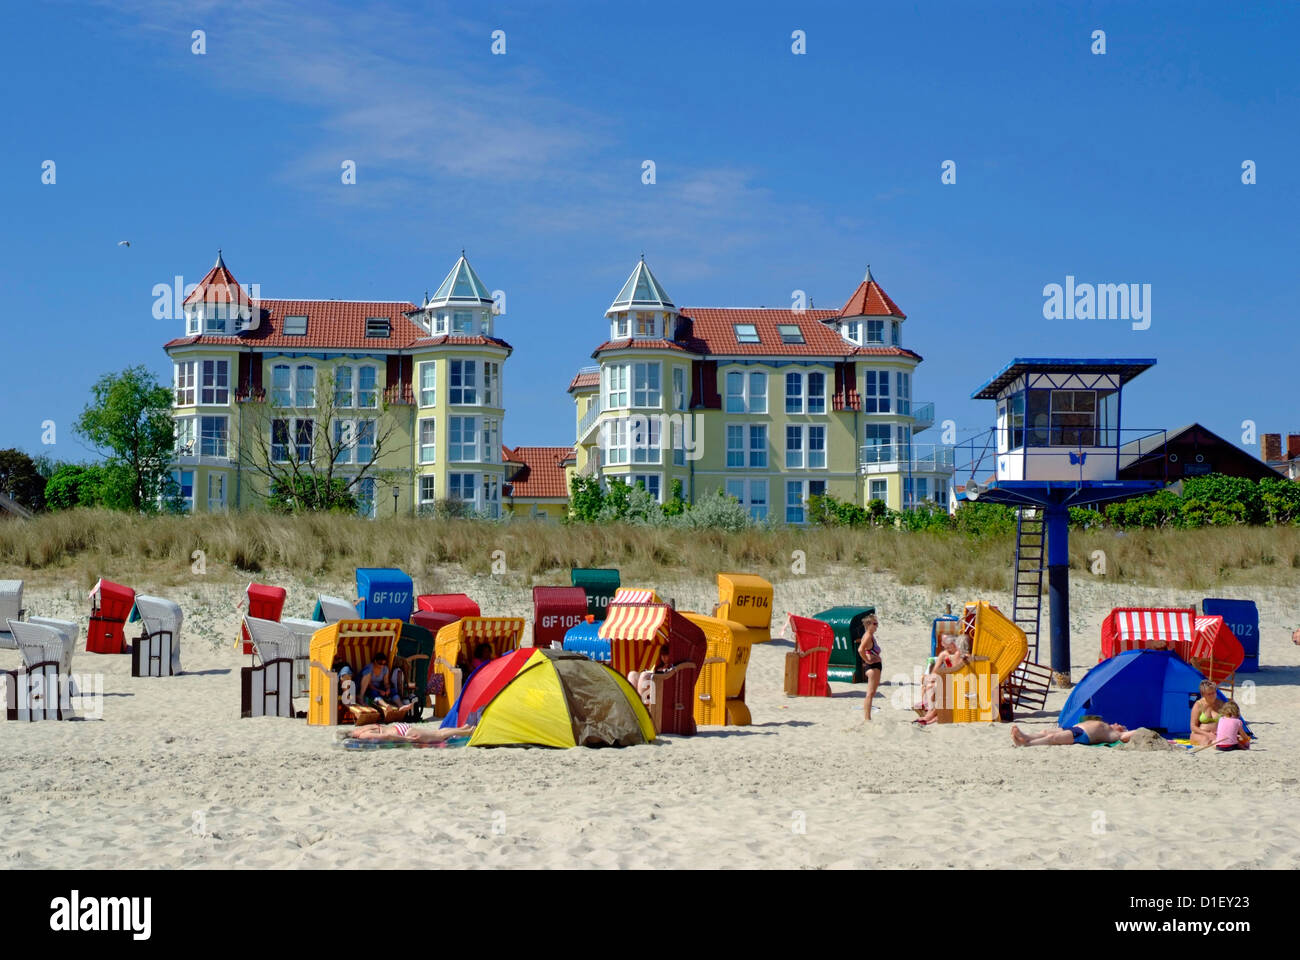 Beach of Bansin, Usedom, Germany Stock Photo